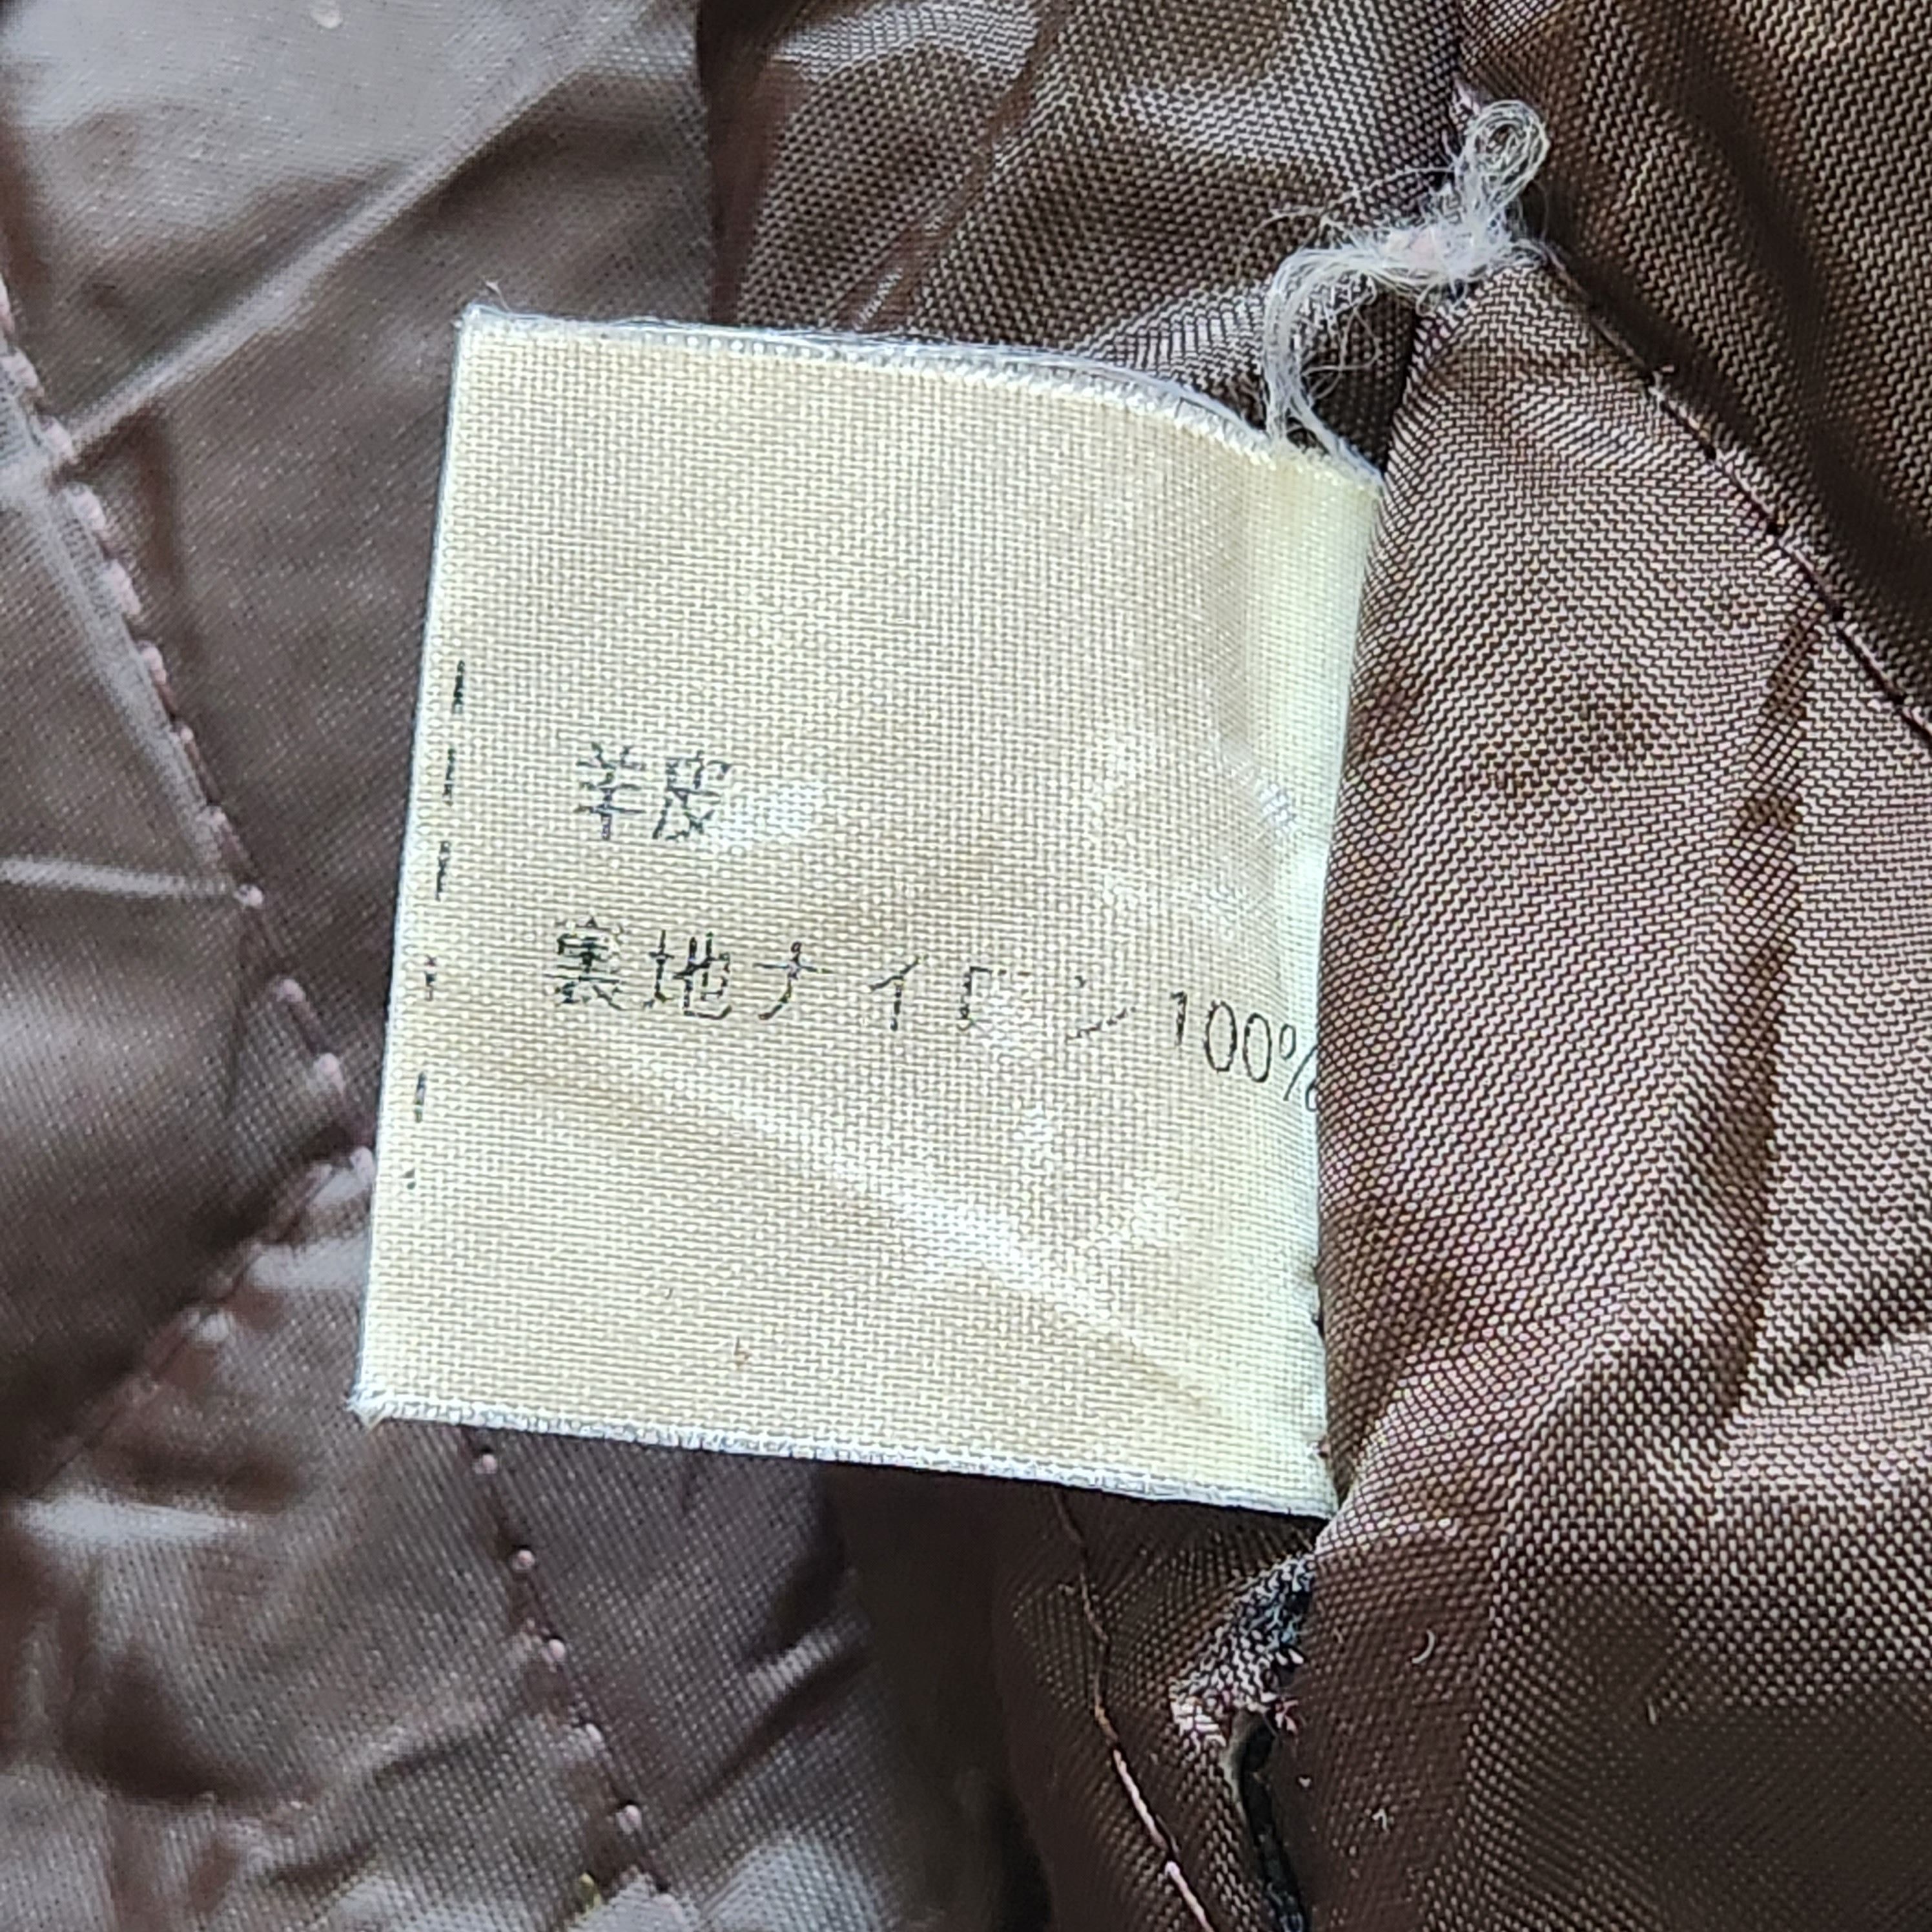 Grails Vintage Patches Genuine Leather Fur Jacket - 3